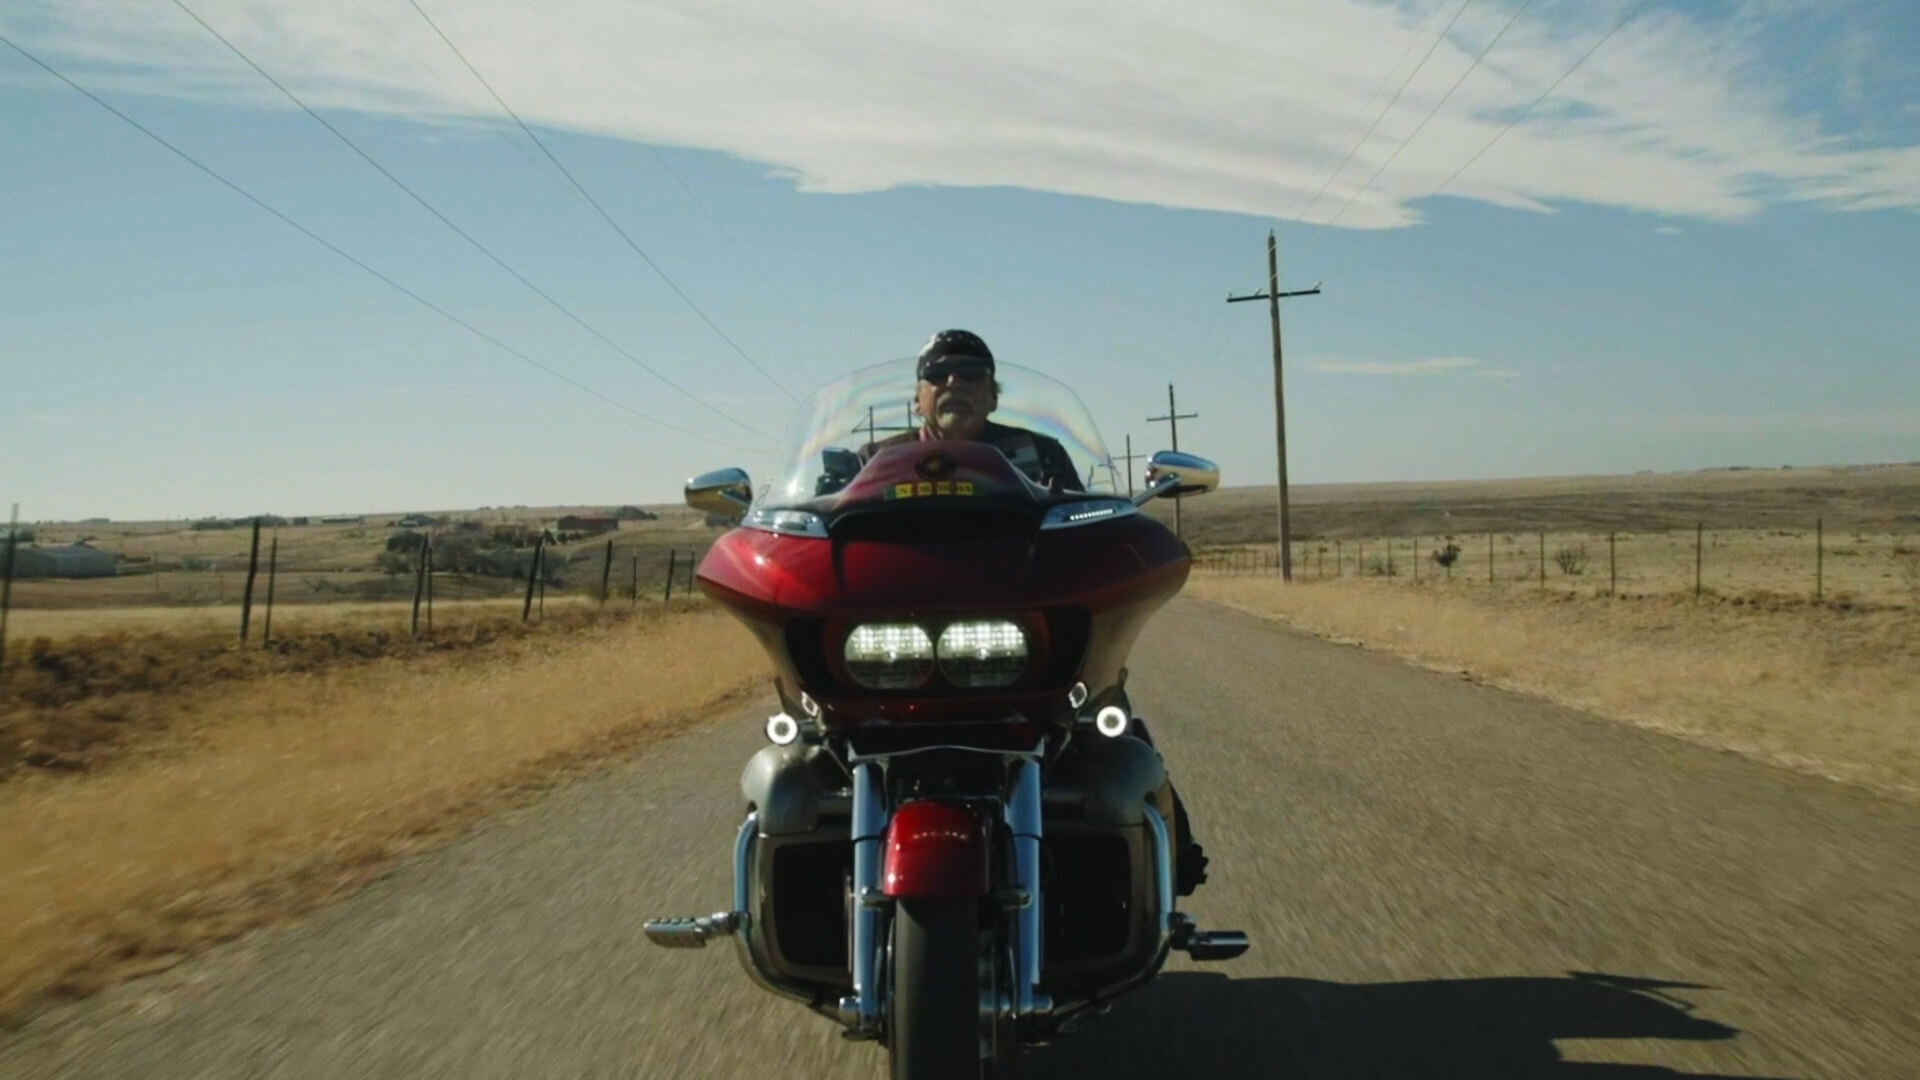 Man on motorcycle riding through Texas.